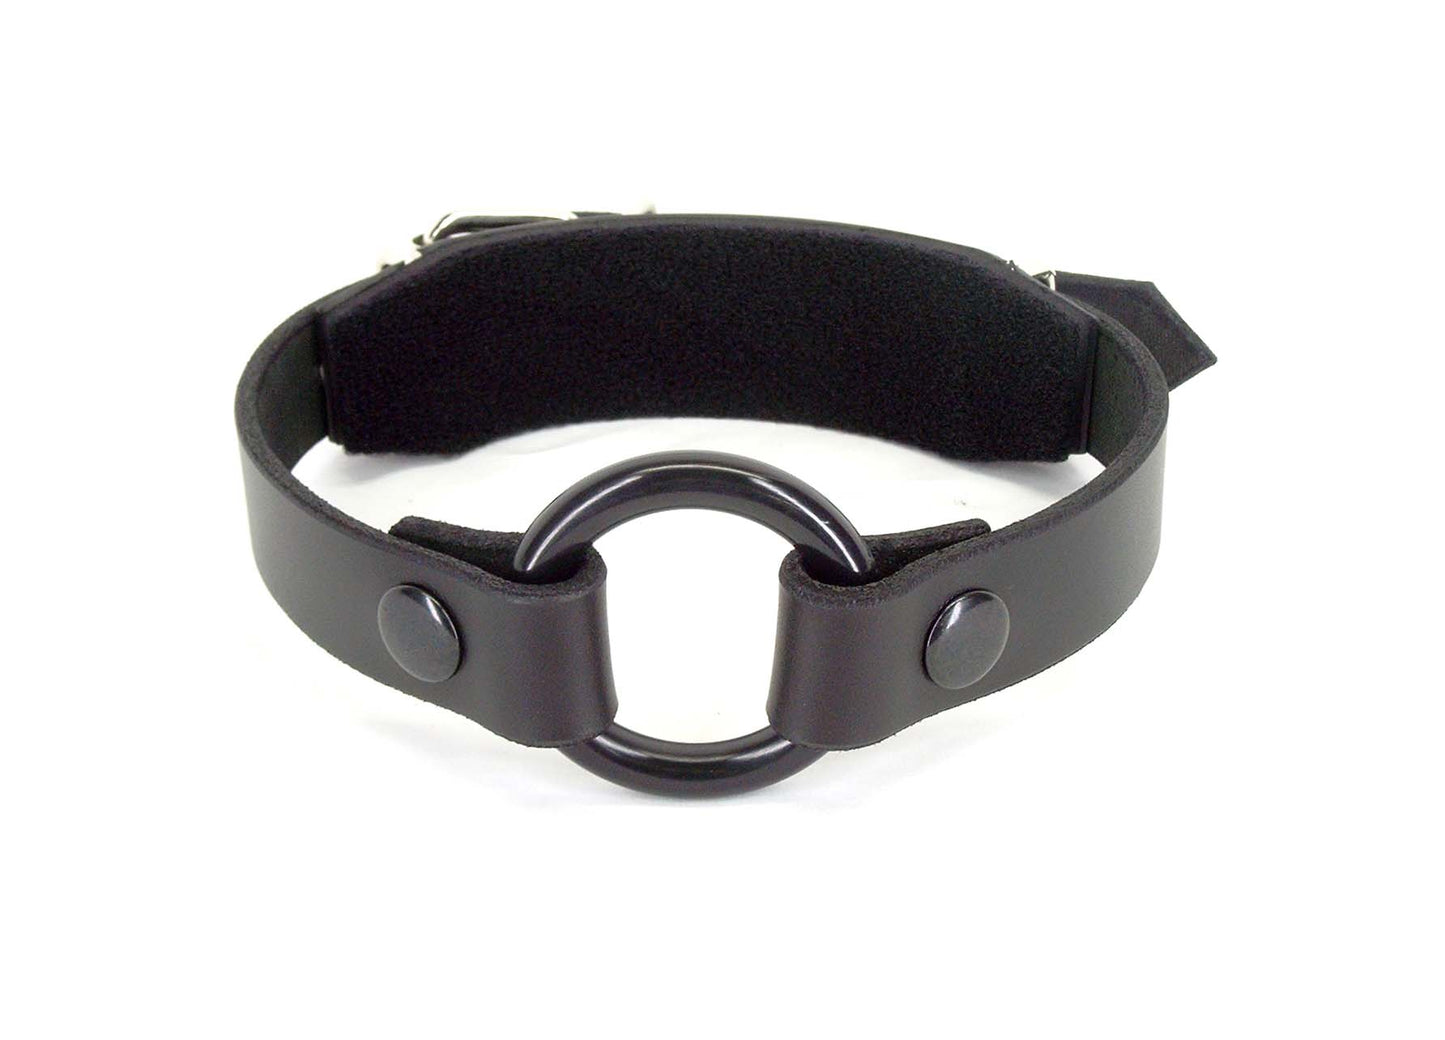 The comfort back O-ring gag with black dental safe O-ring against white background.